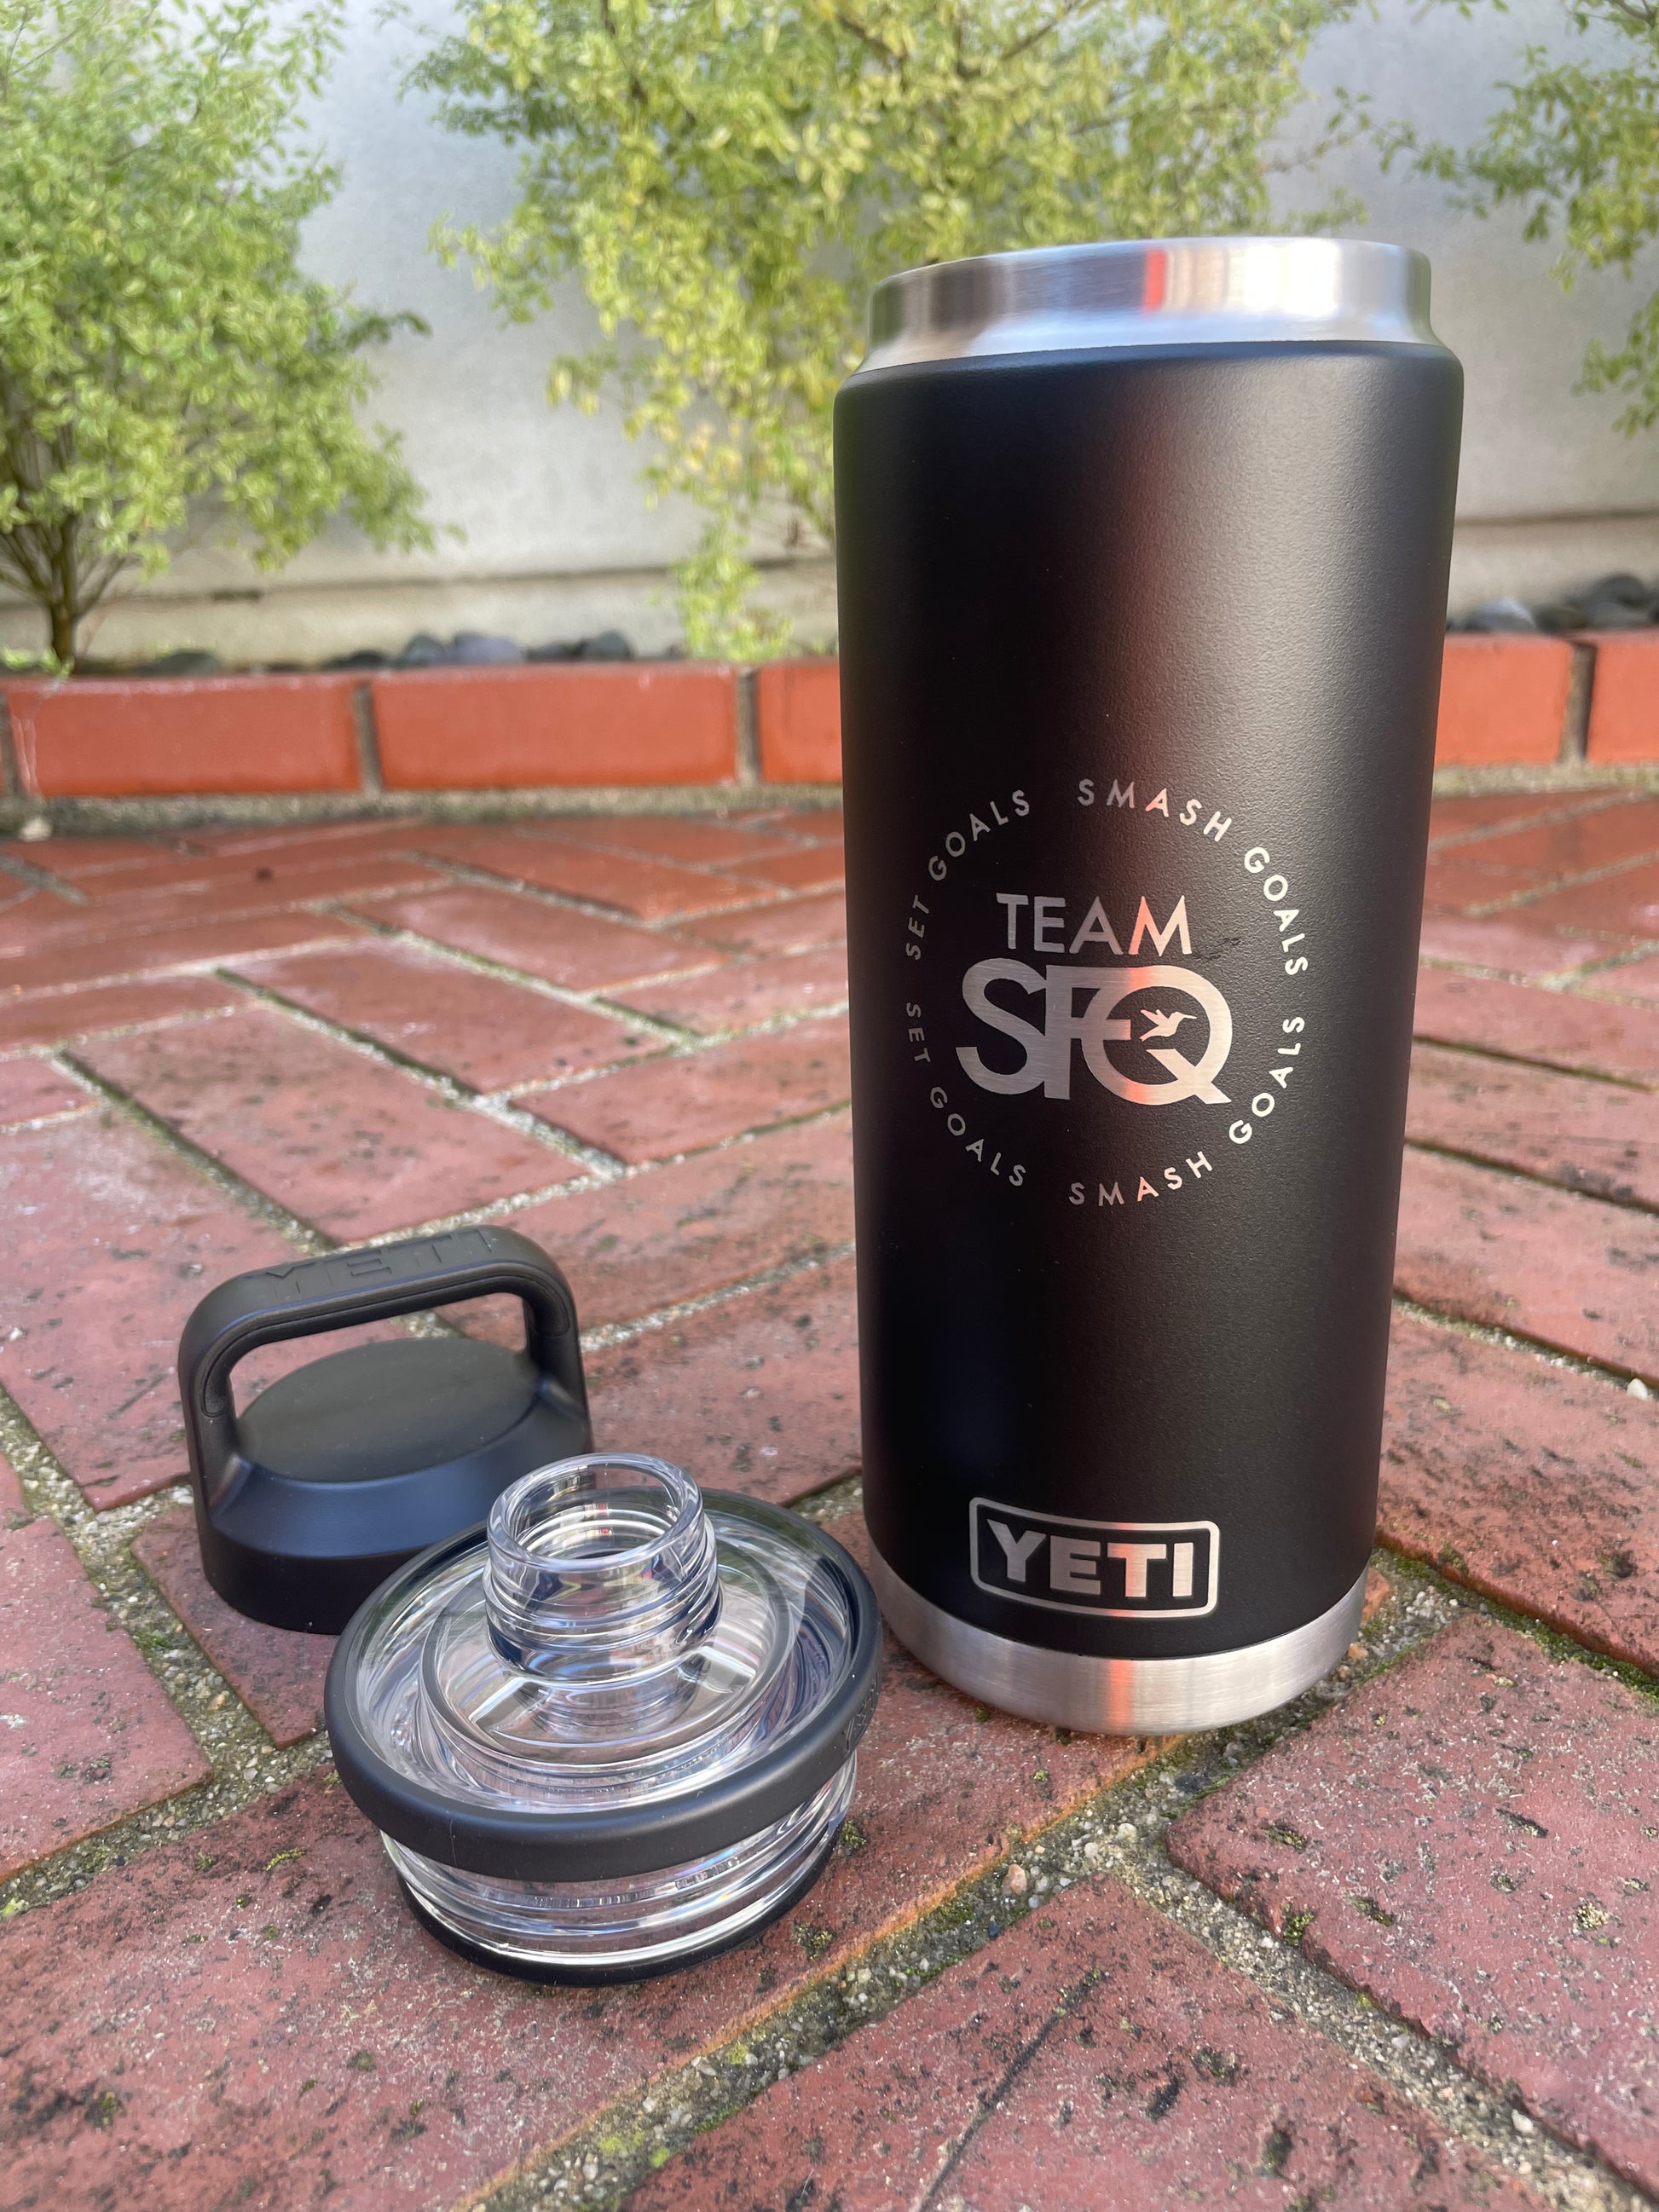 Yeti Rambler 26 oz Bottle with Chug Cap - Stainless Steel